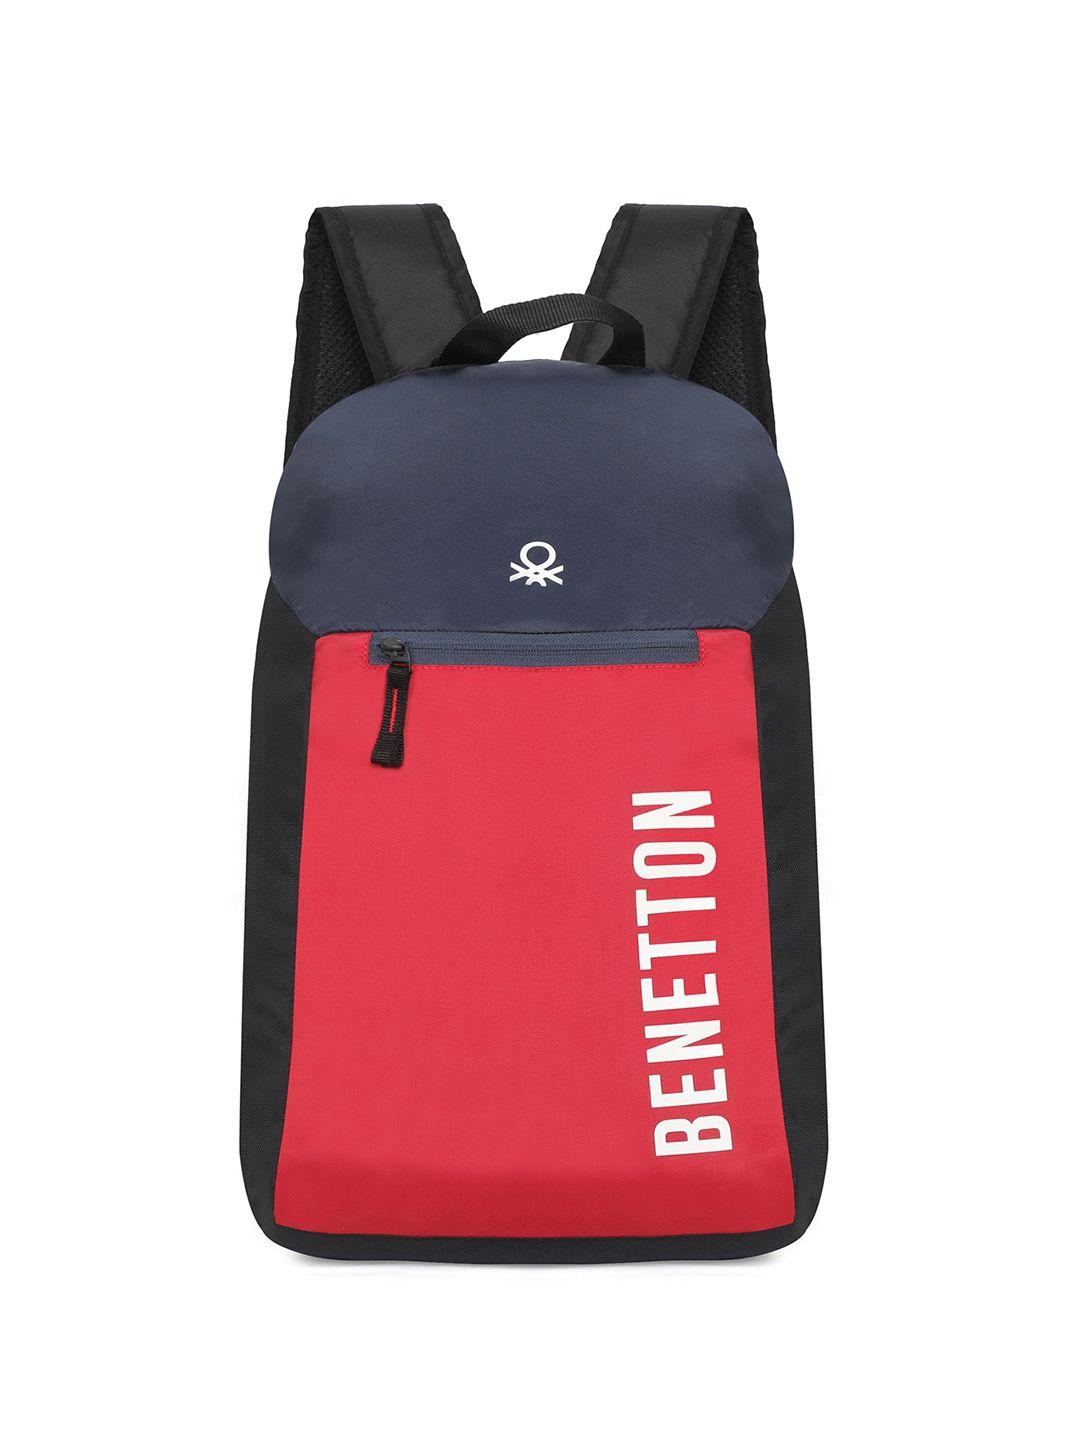 united colors of benetton unisex red & navy blue brand logo backpack